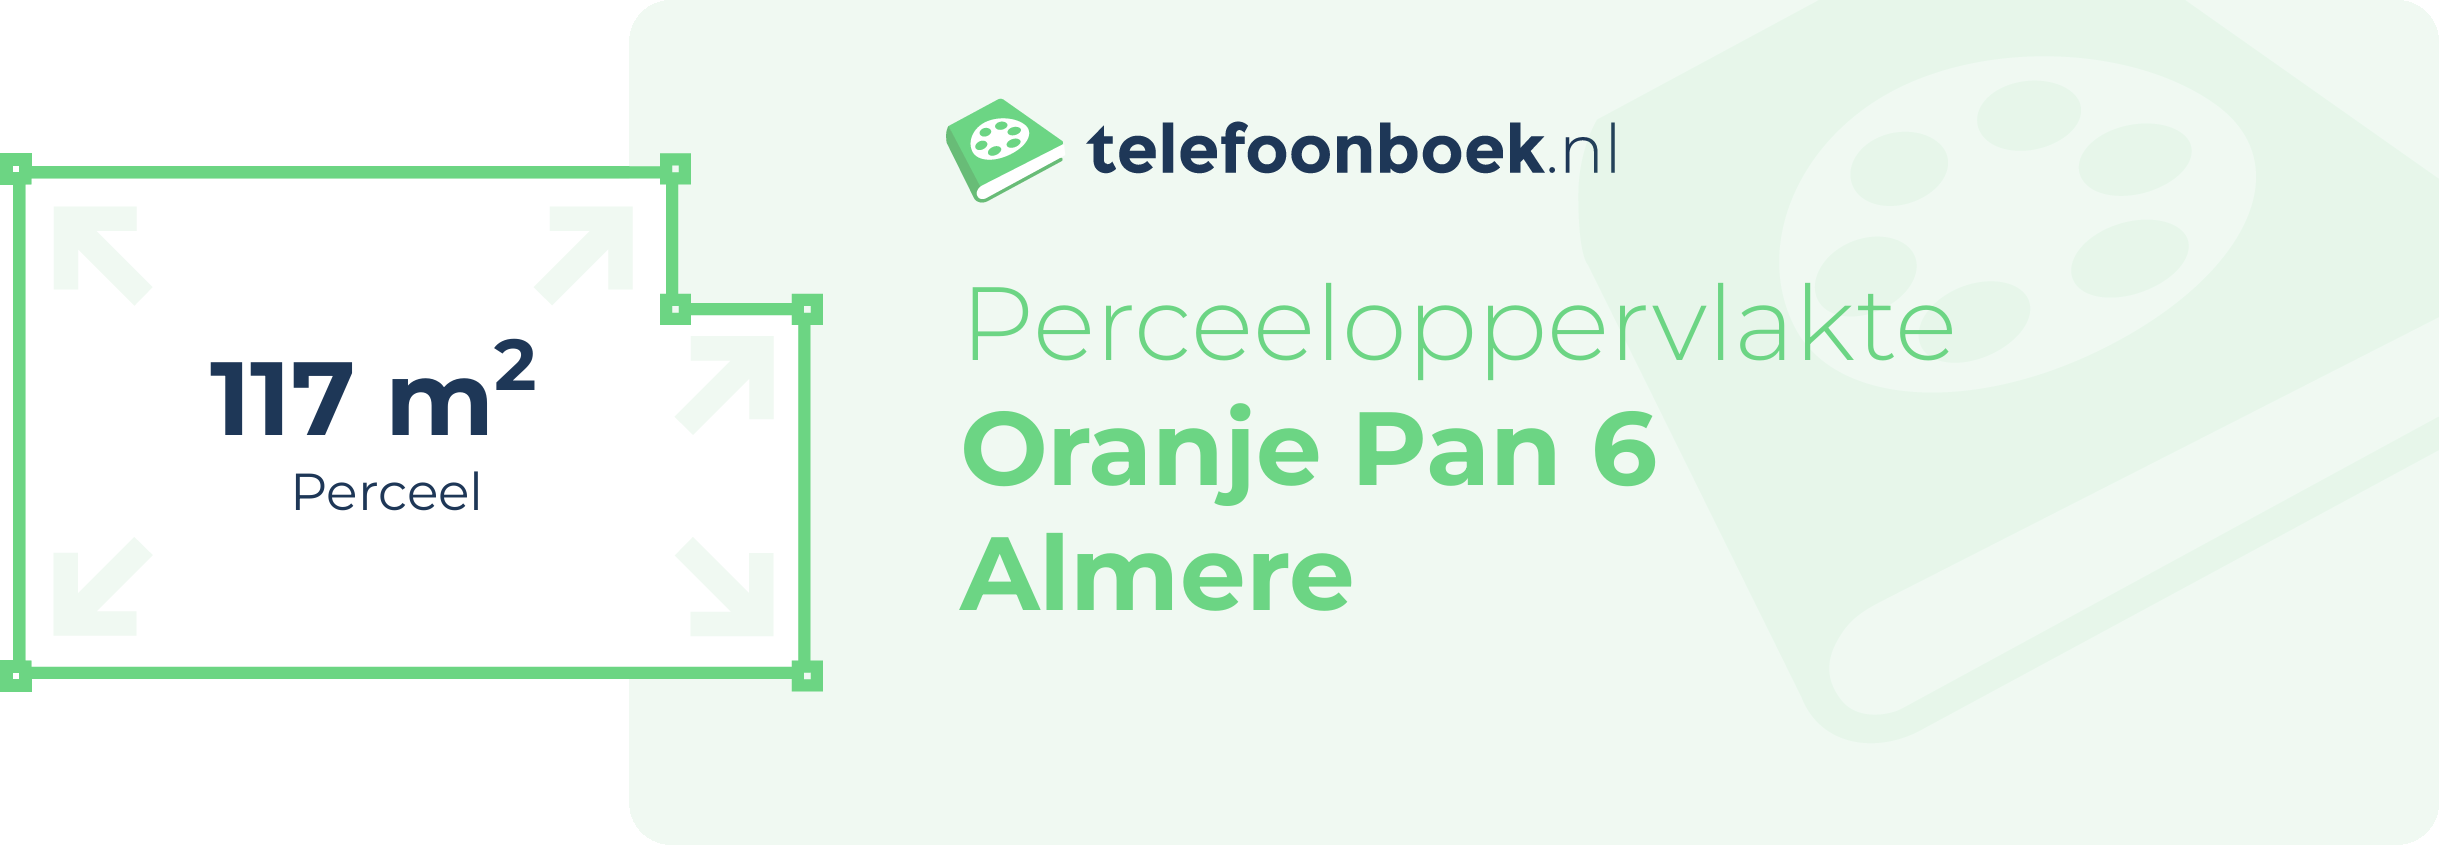 Perceeloppervlakte Oranje Pan 6 Almere